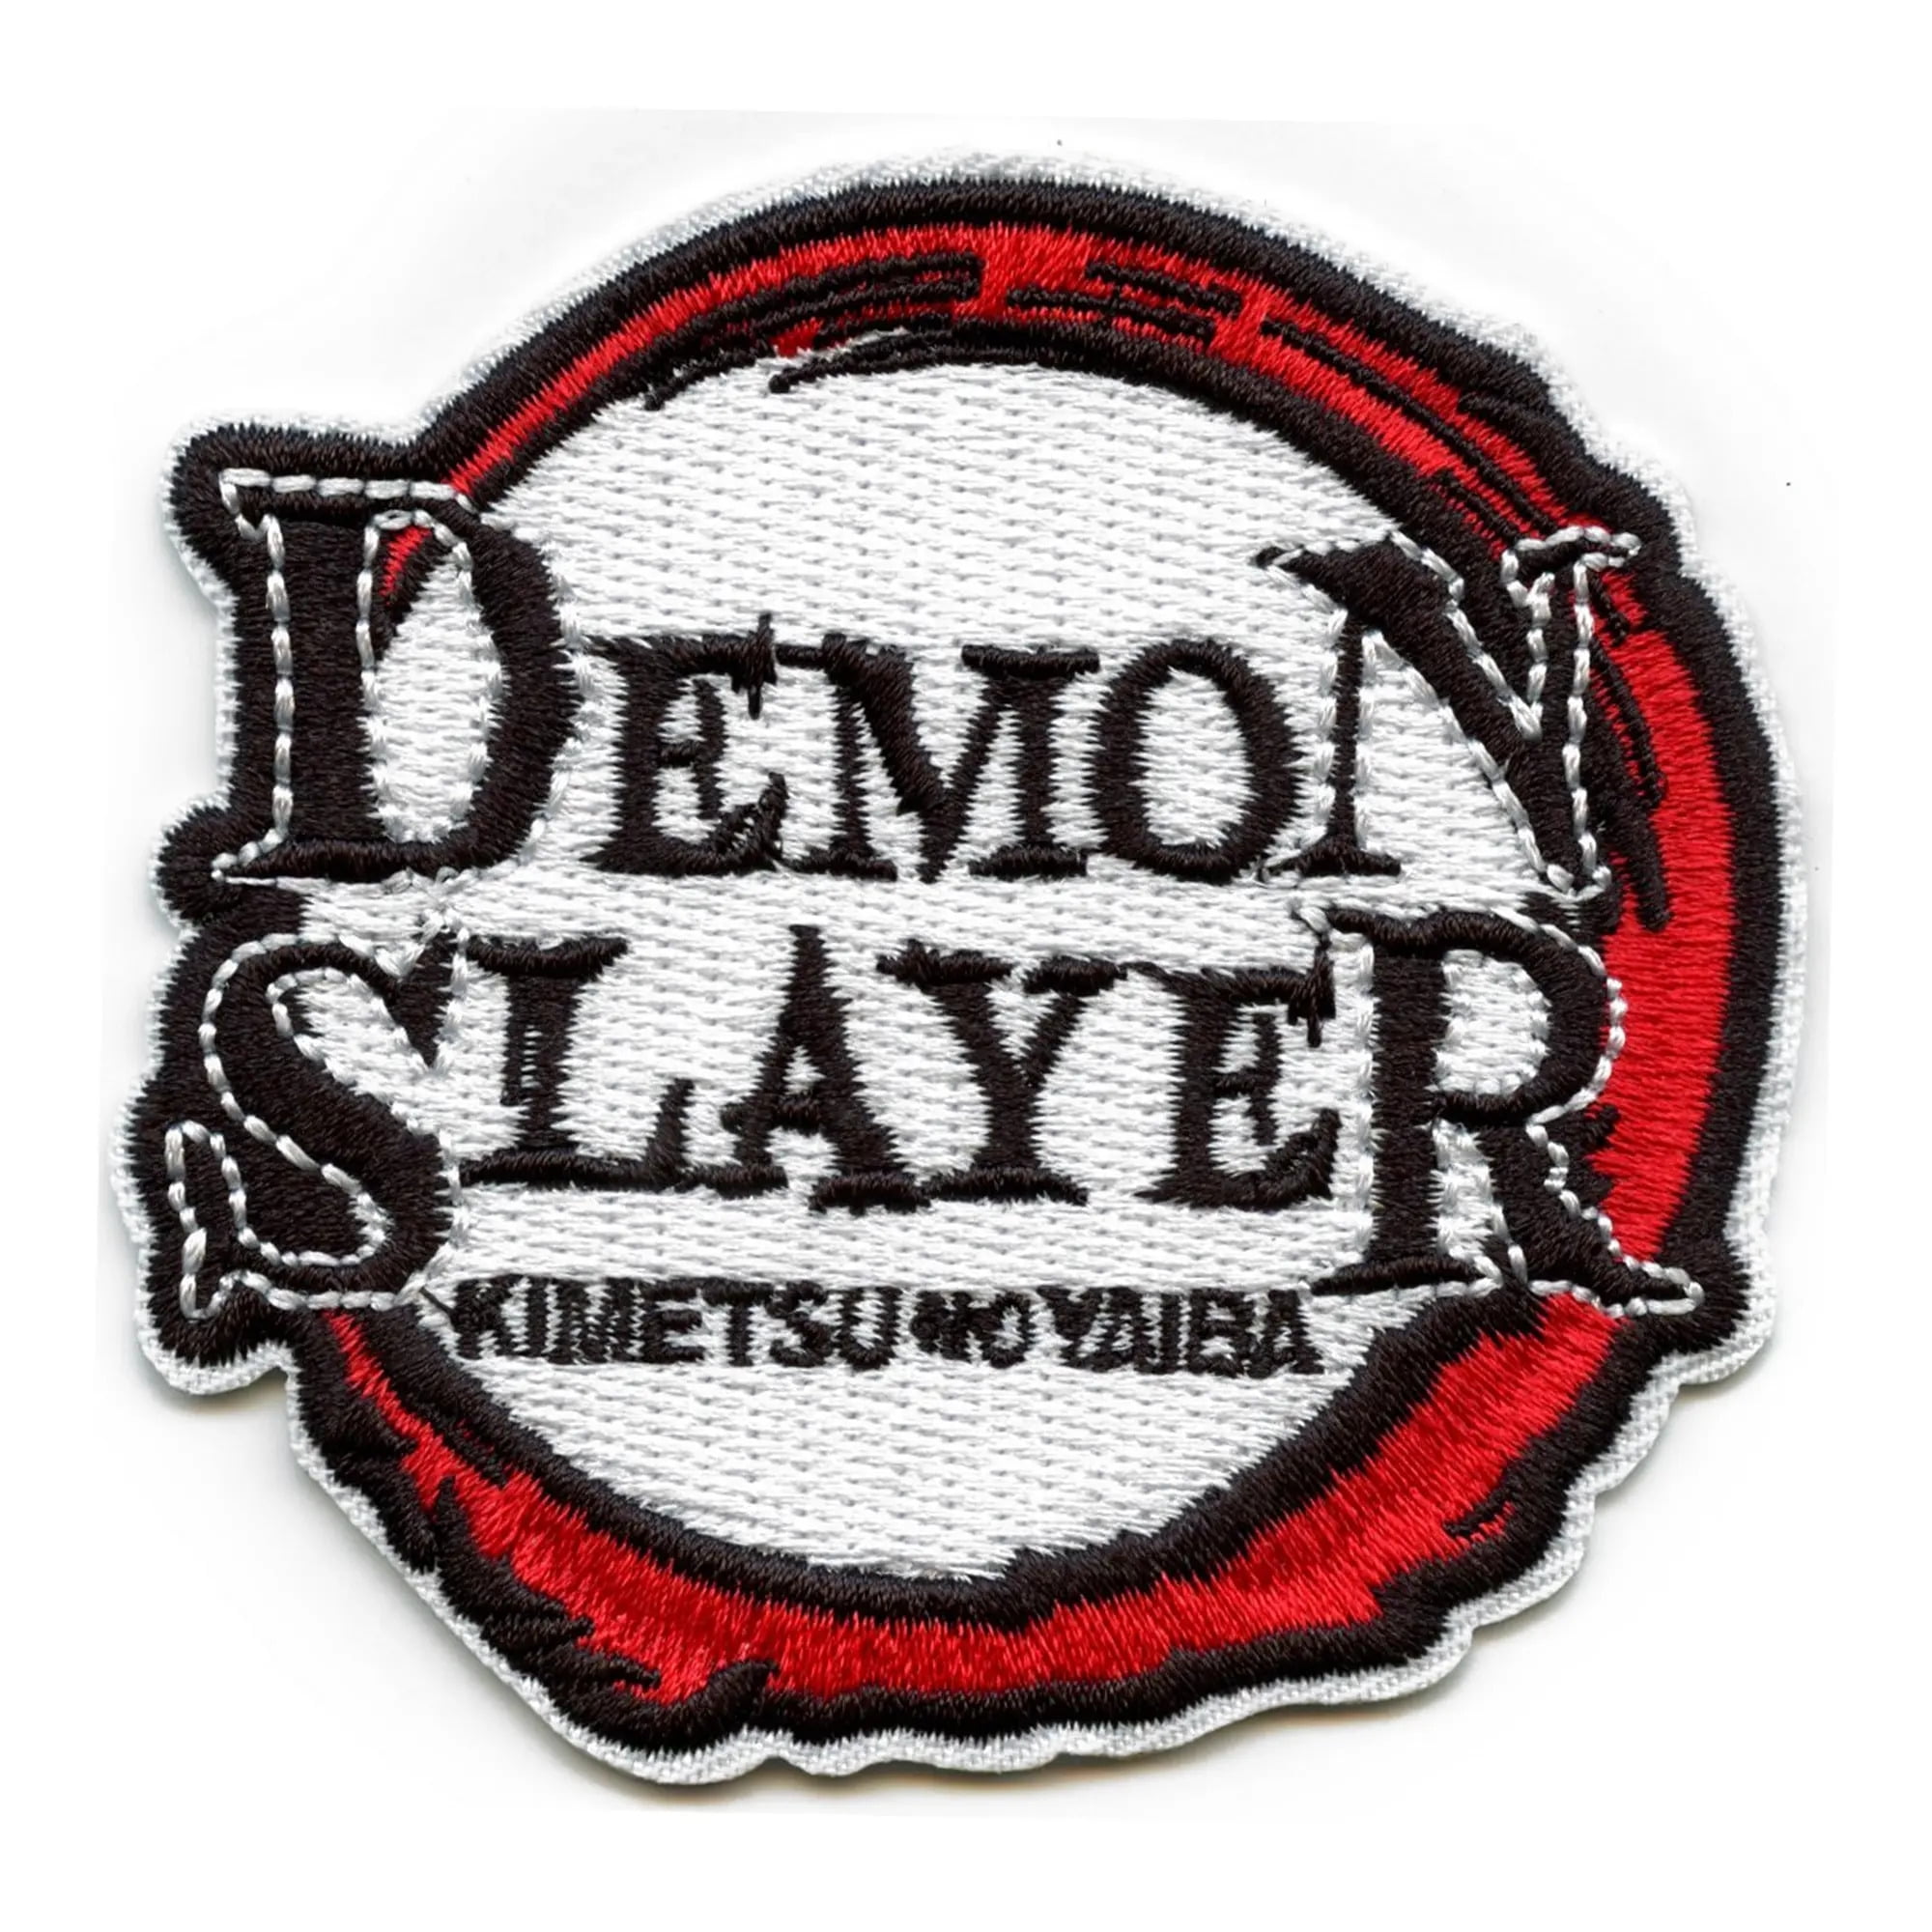 Demon Slayer Anime Kimetsu no Yaiba Iron-On/Sew-On Patches LAST CHANCE!  Bandai - Beautiful Textiles